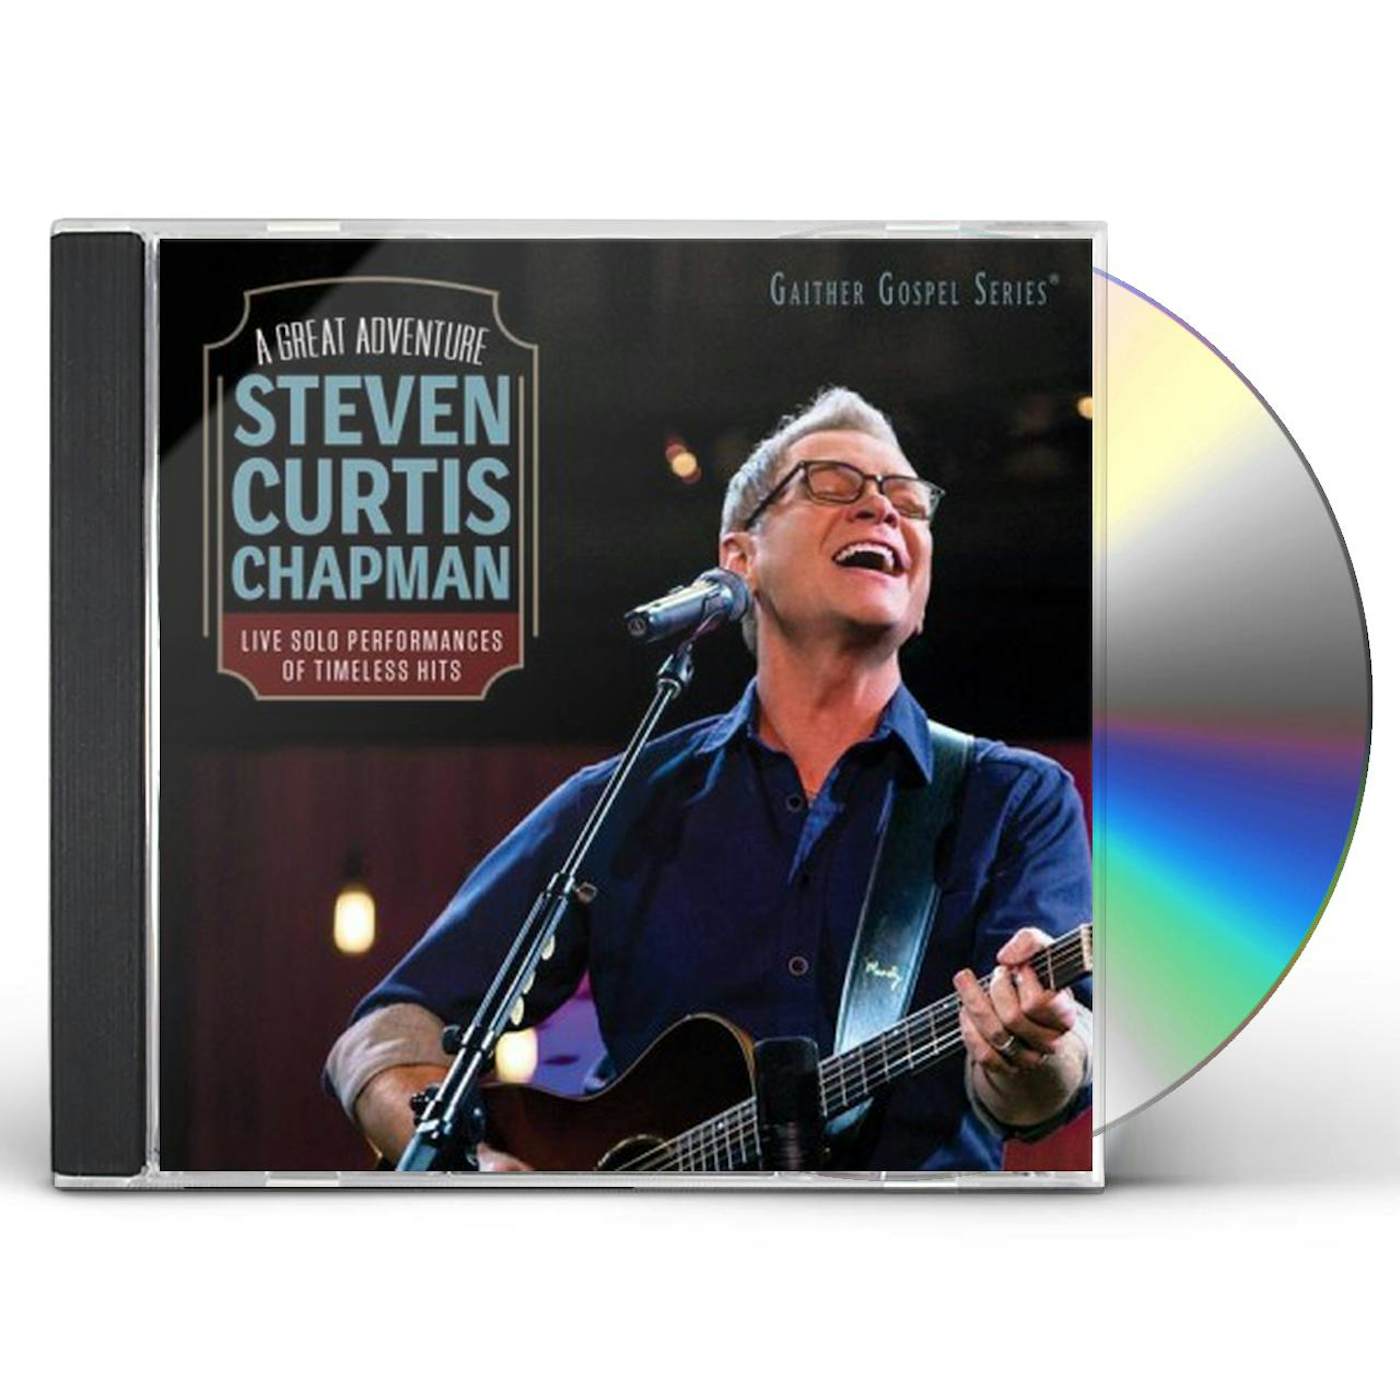 Steven Curtis Chapman GREAT ADVENTURE CD